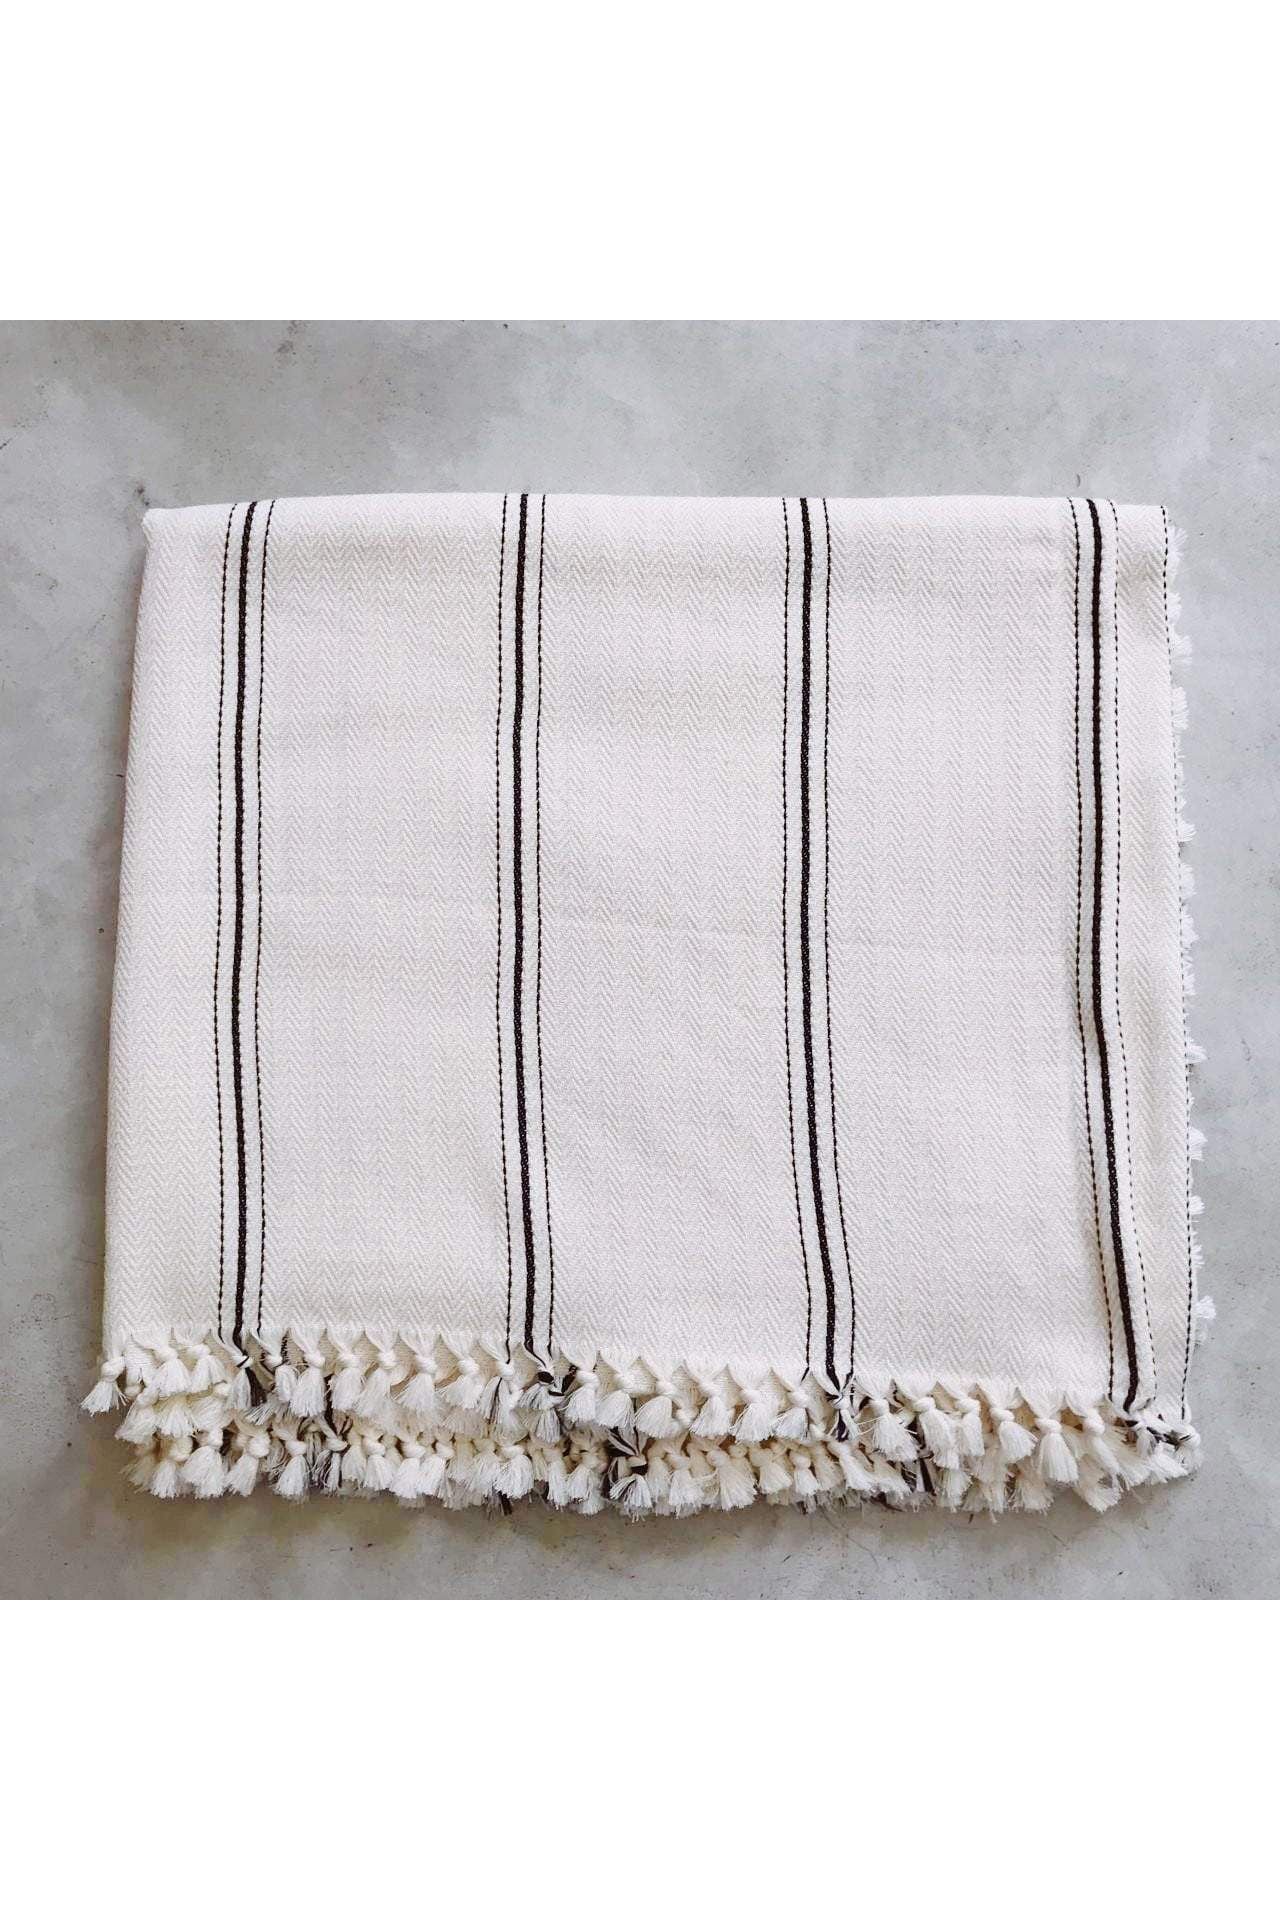 Turkish cotton throw - Moroccan stripe